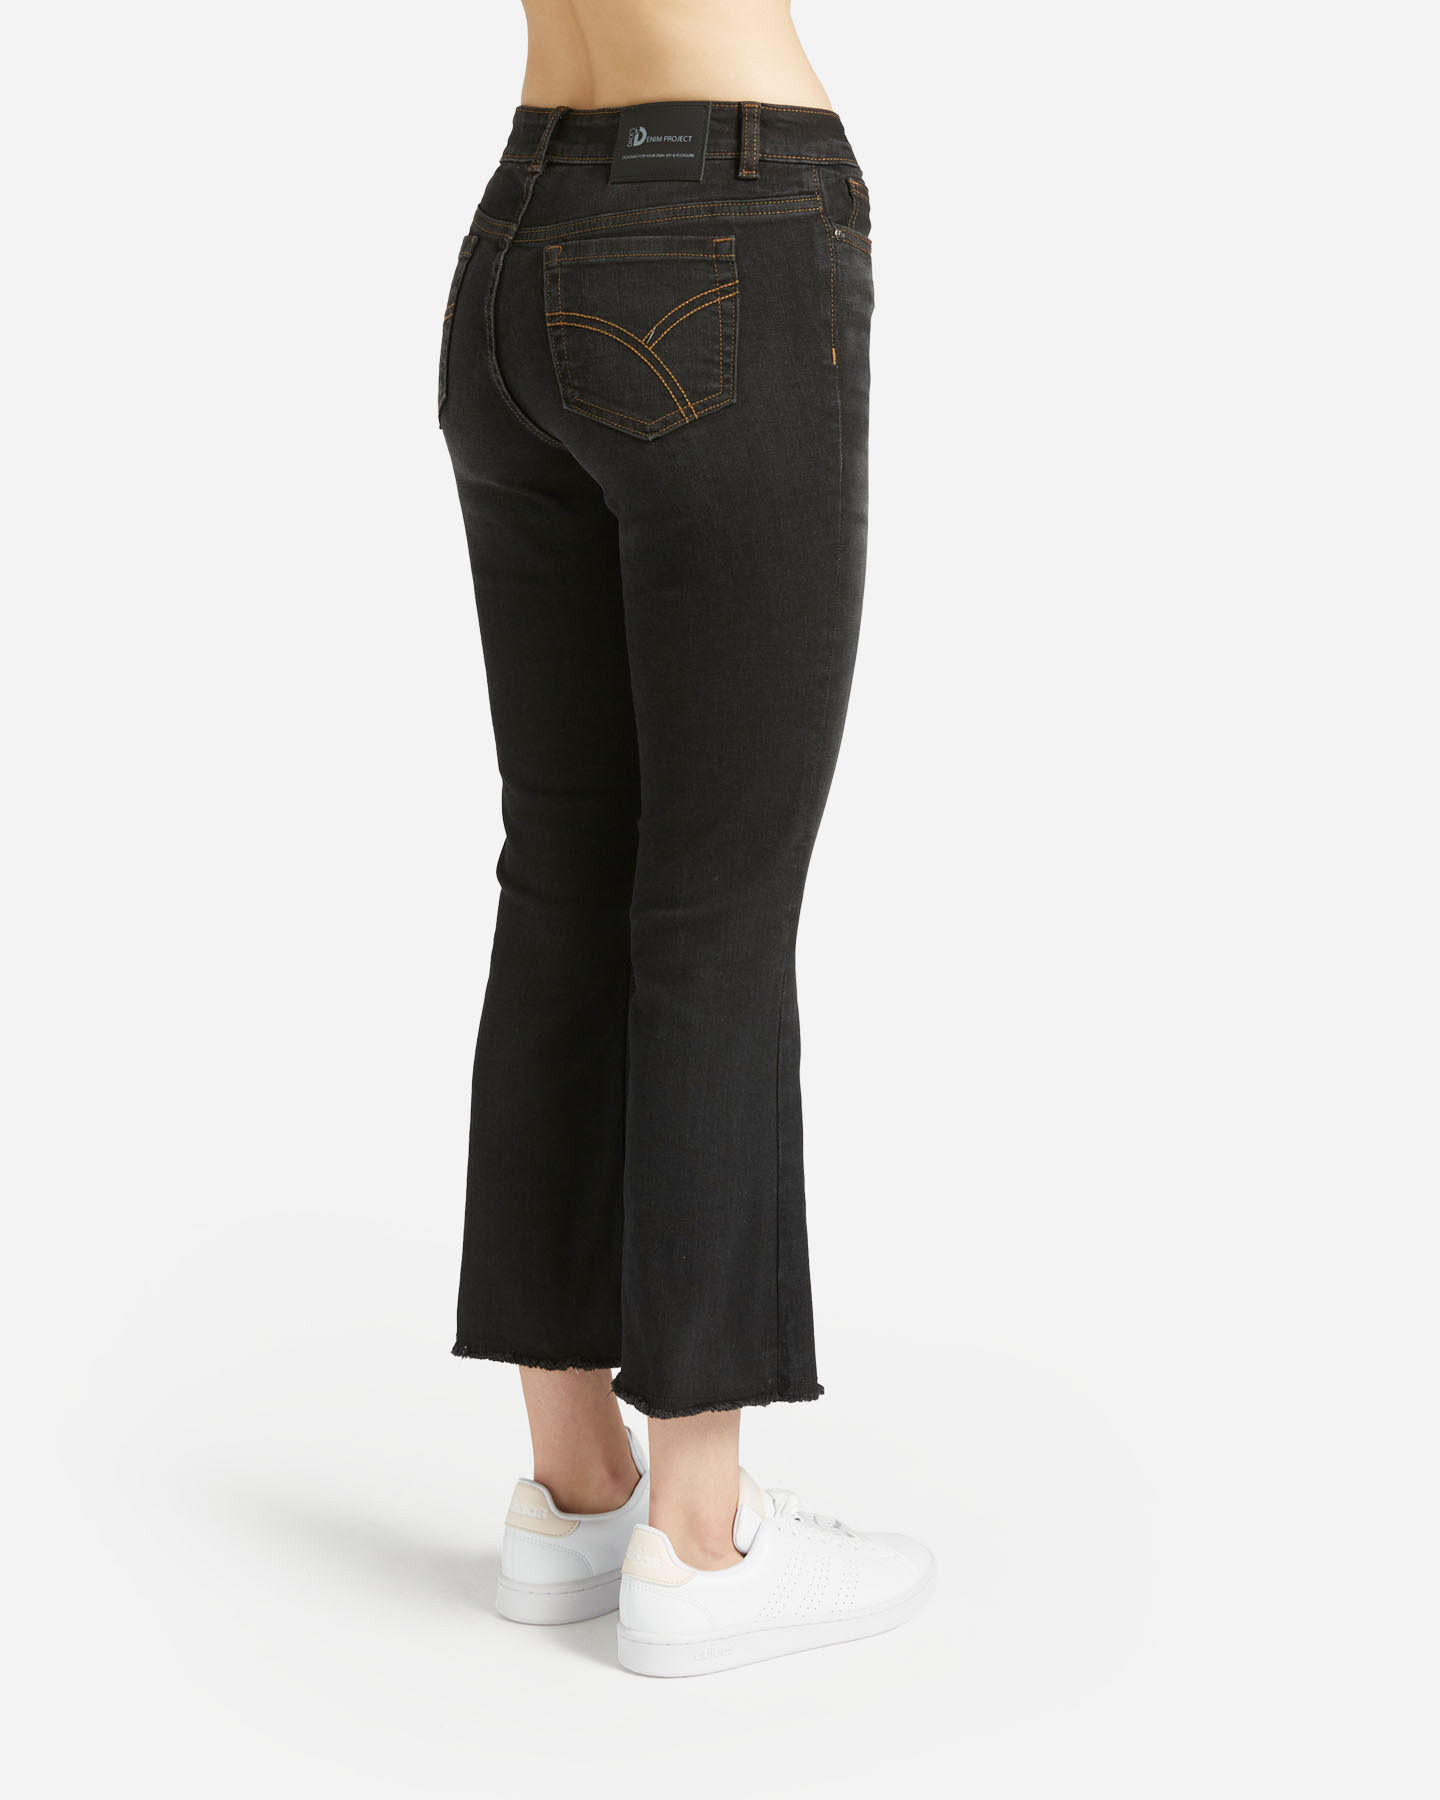  Jeans DACK'S DENIM PROJECT W S4124818|DD|40 scatto 1